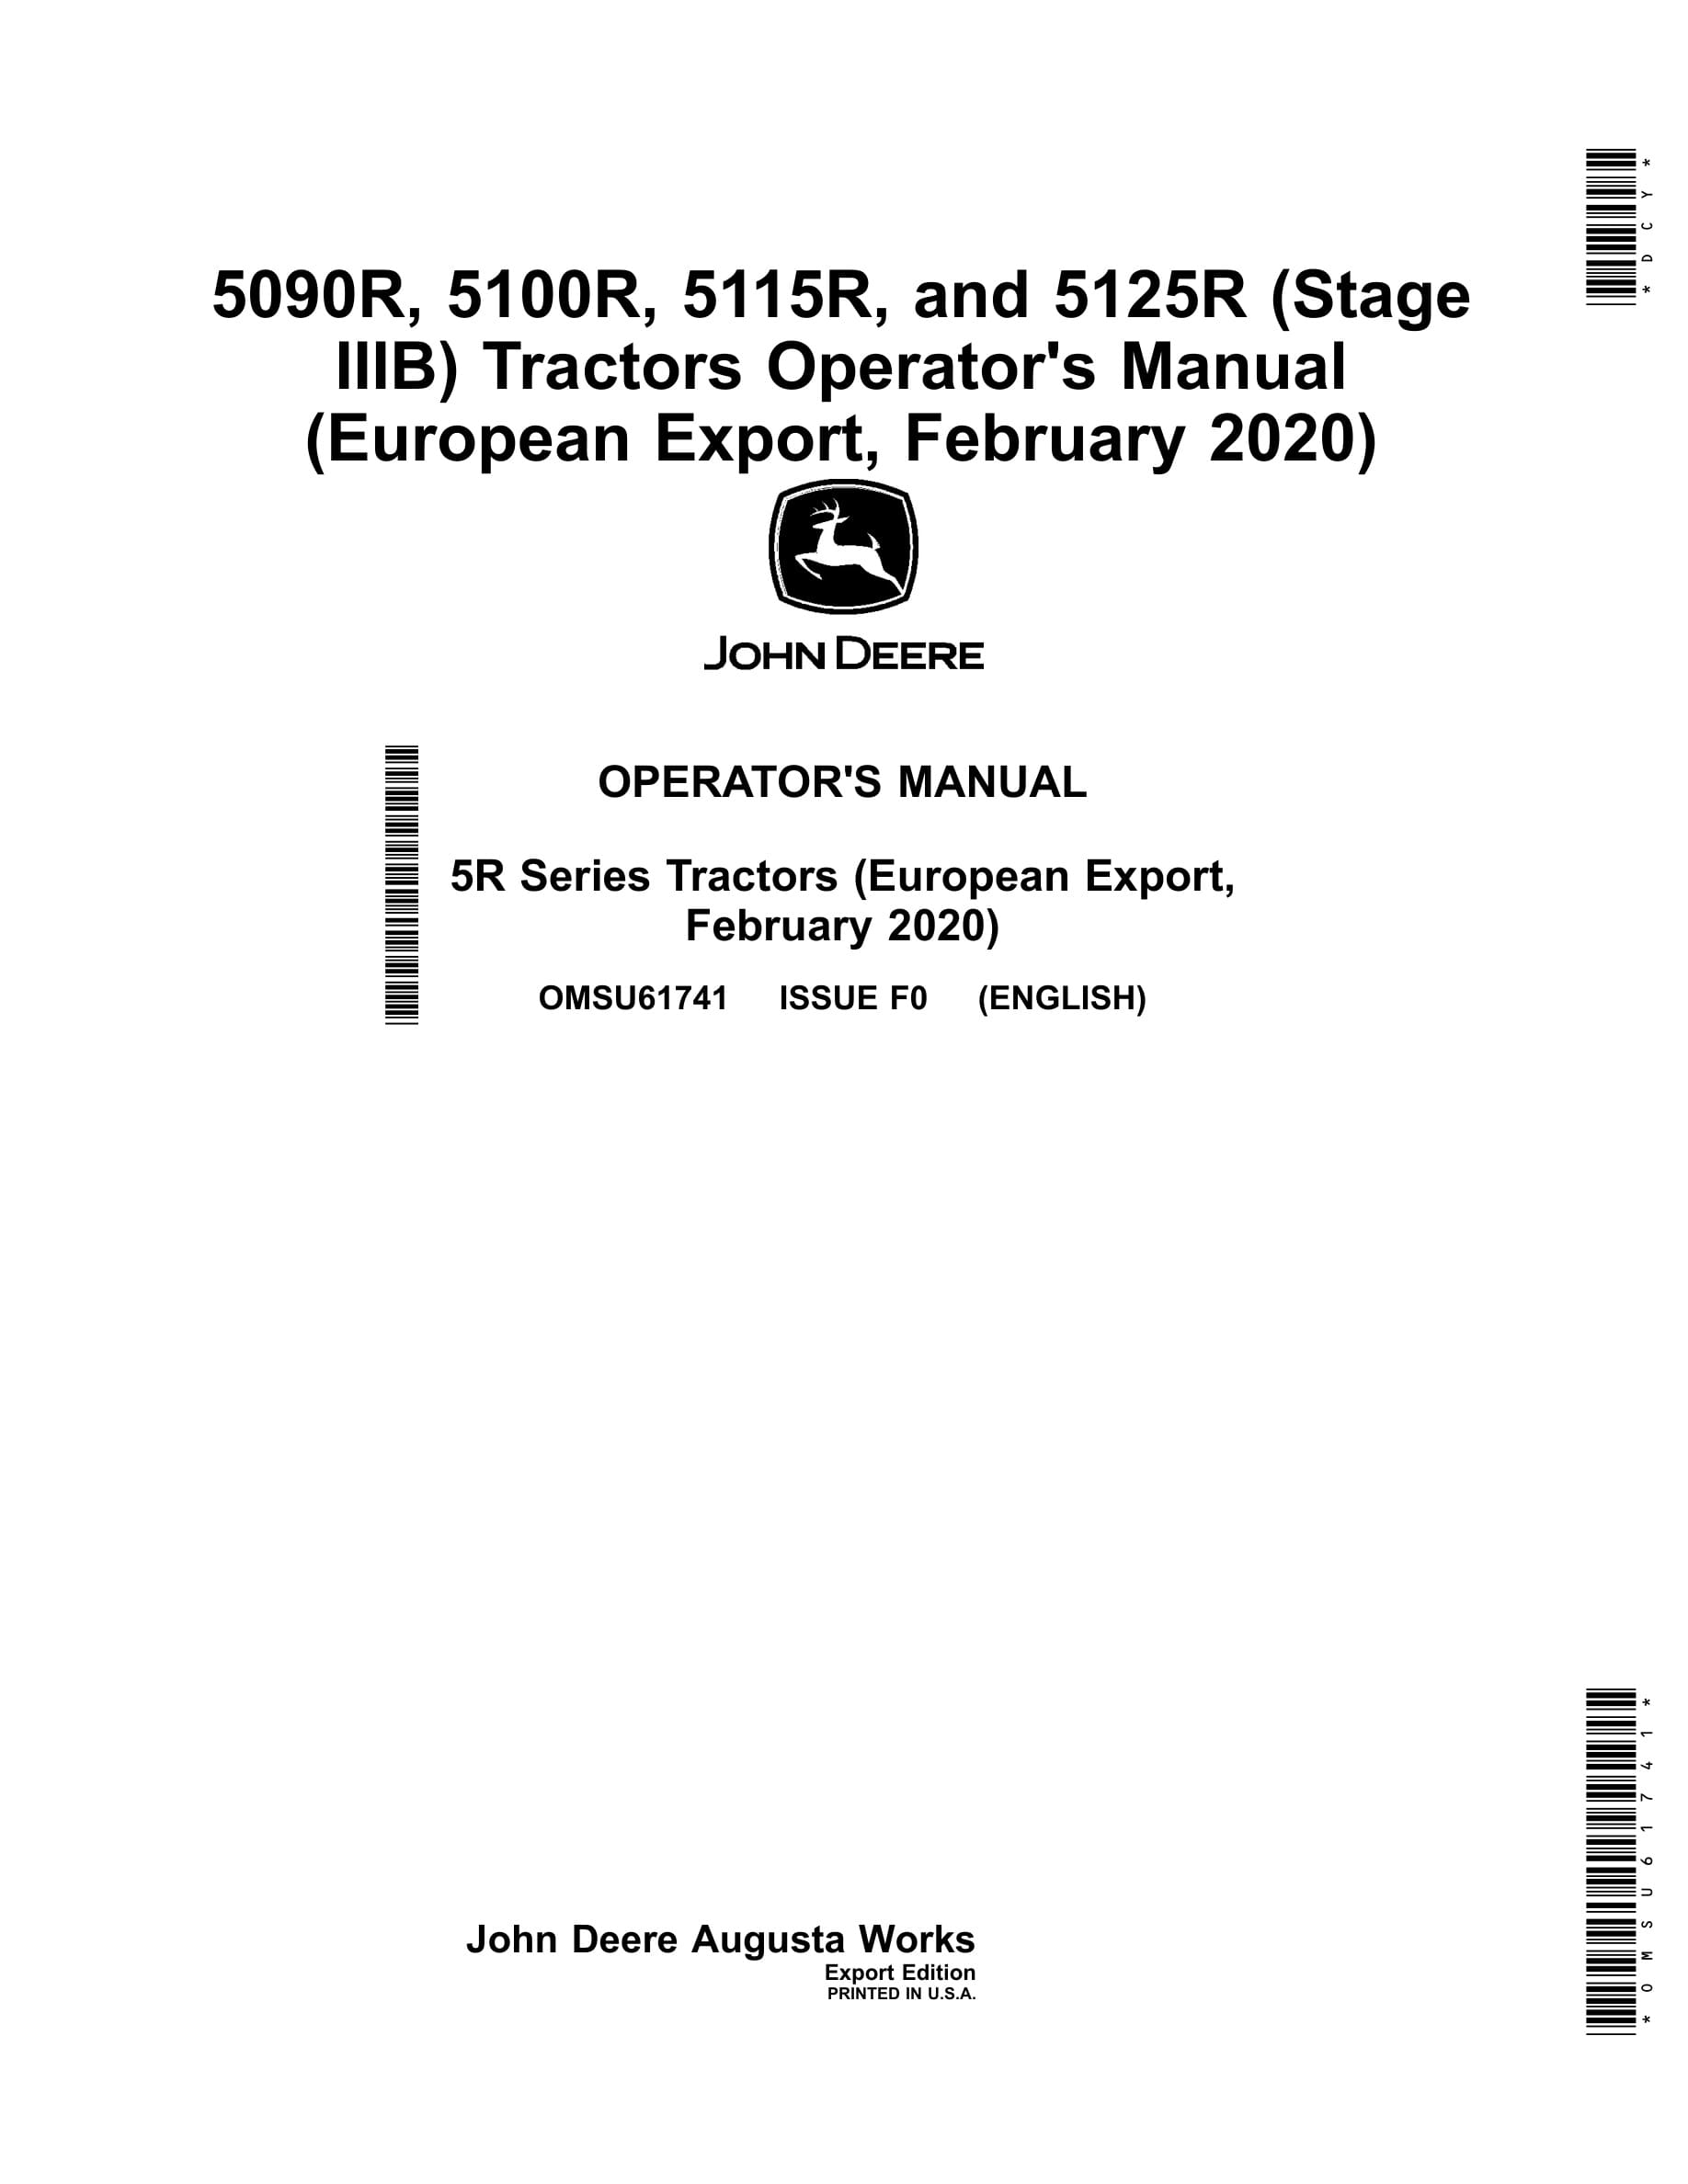 John Deere 5090r, 5100r, 5115r, And 5125r (stage Iiib) Tractors Operator Manuals OMSU61741-1